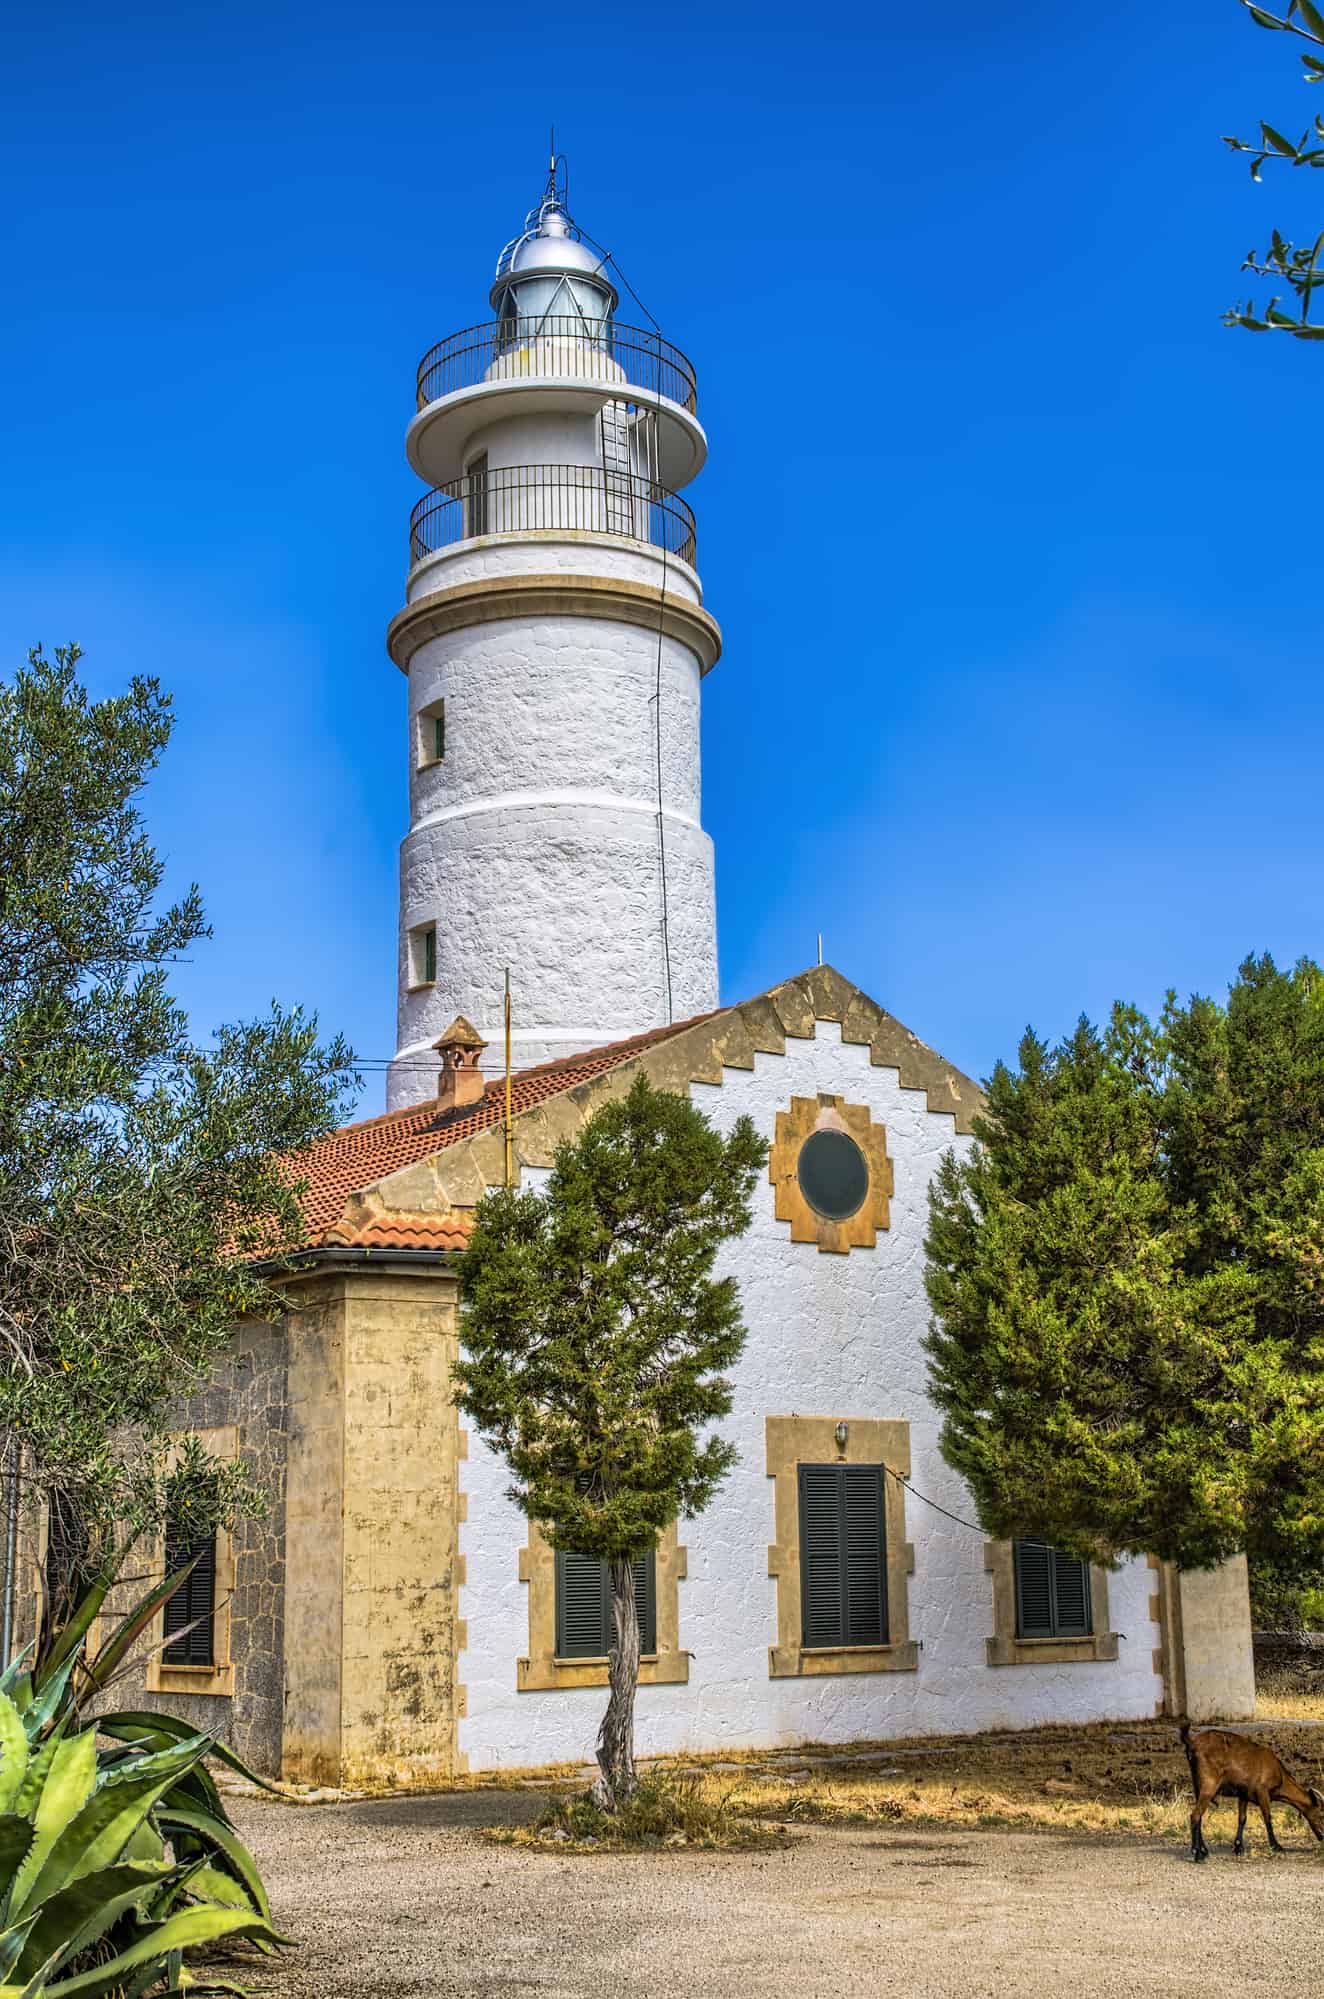 Lighthouse at Port de Soller in Majorca